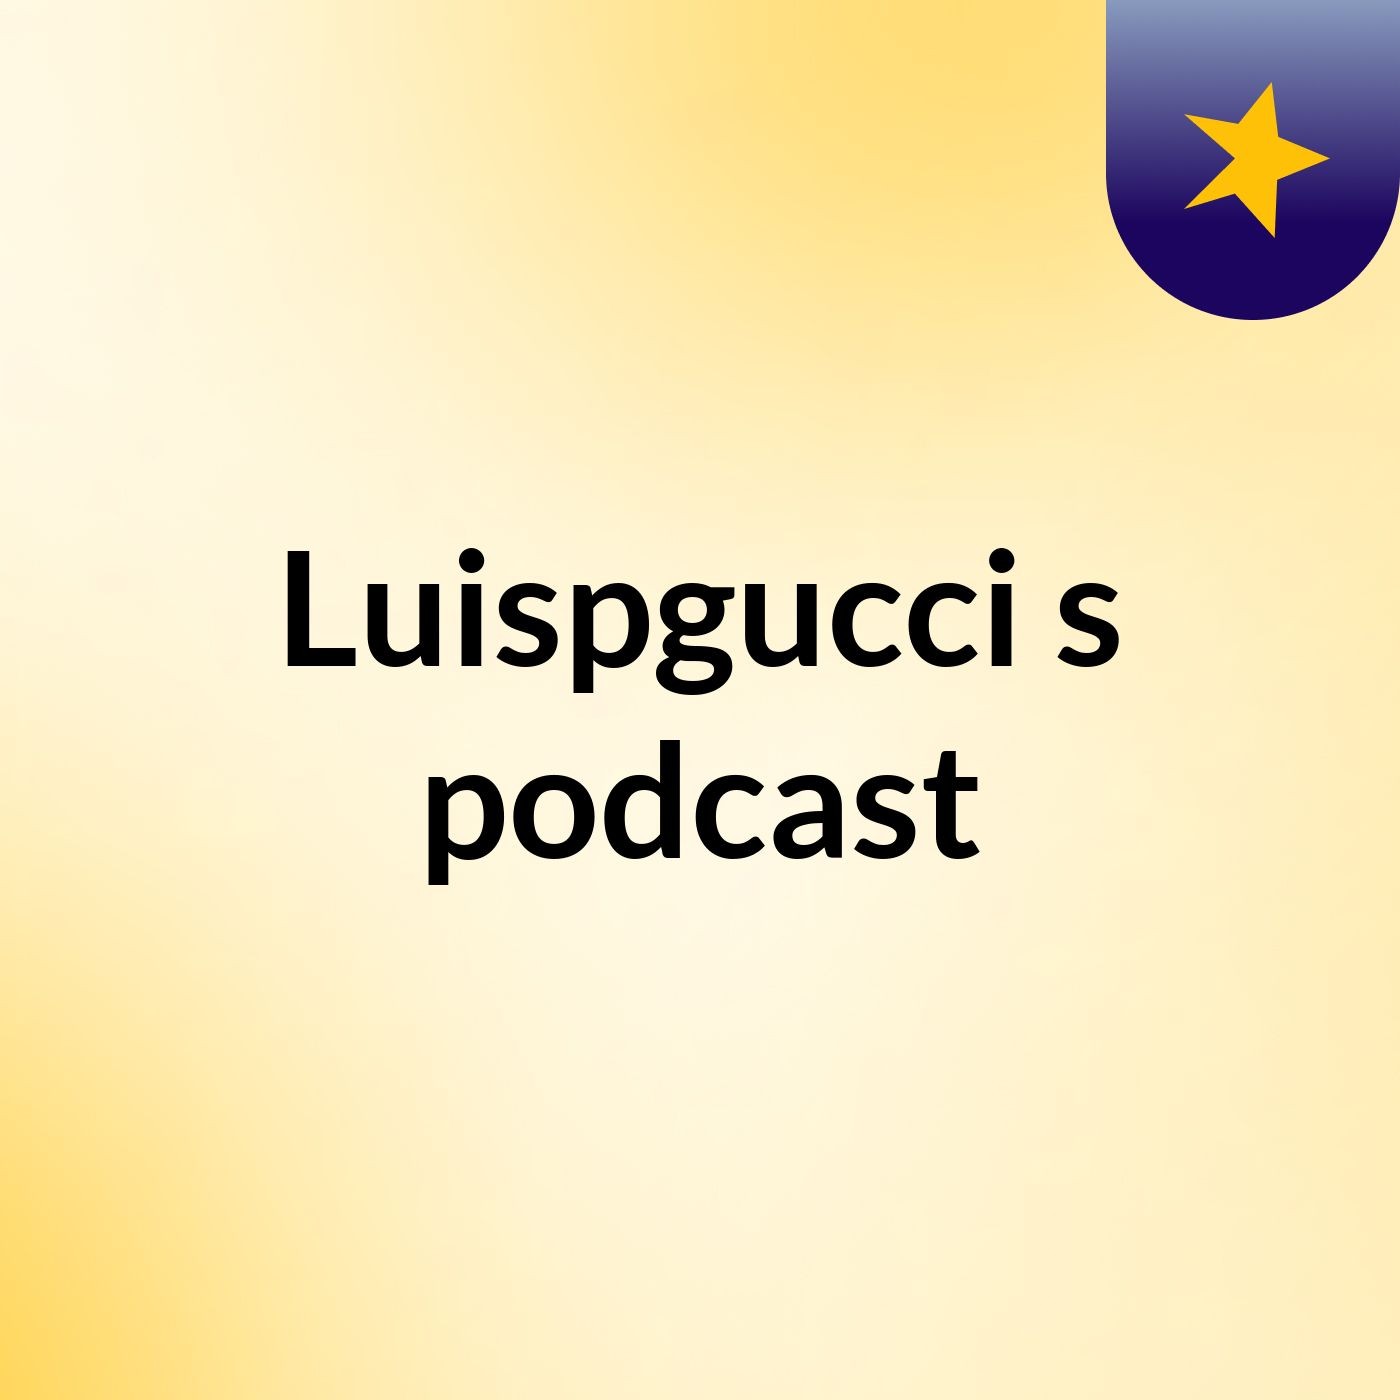 Episode 6 - Luispgucci's podcast